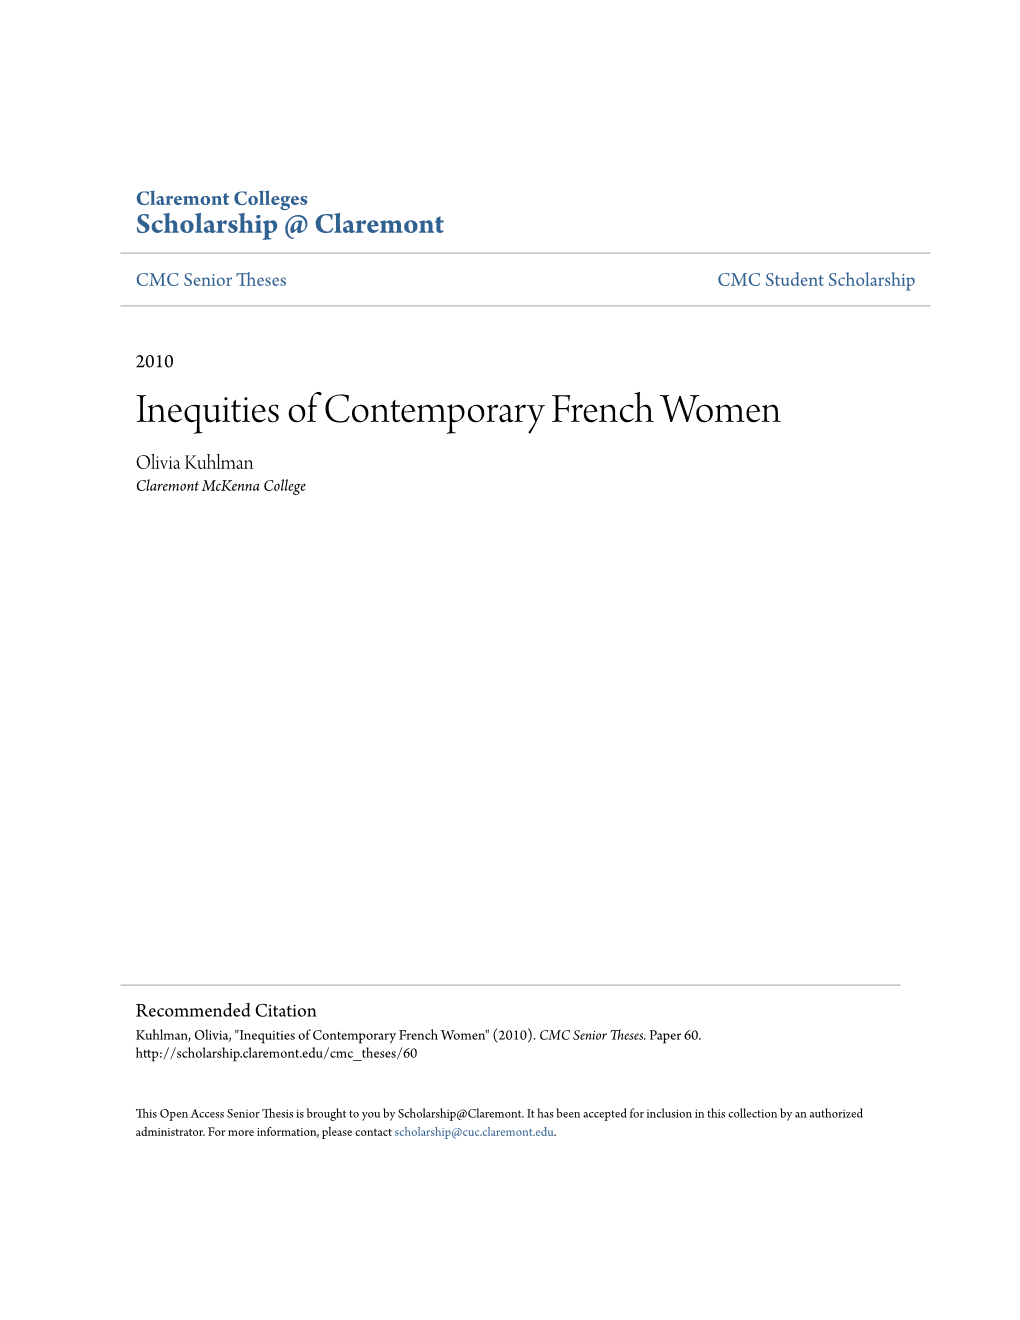 Inequities of Contemporary French Women Olivia Kuhlman Claremont Mckenna College